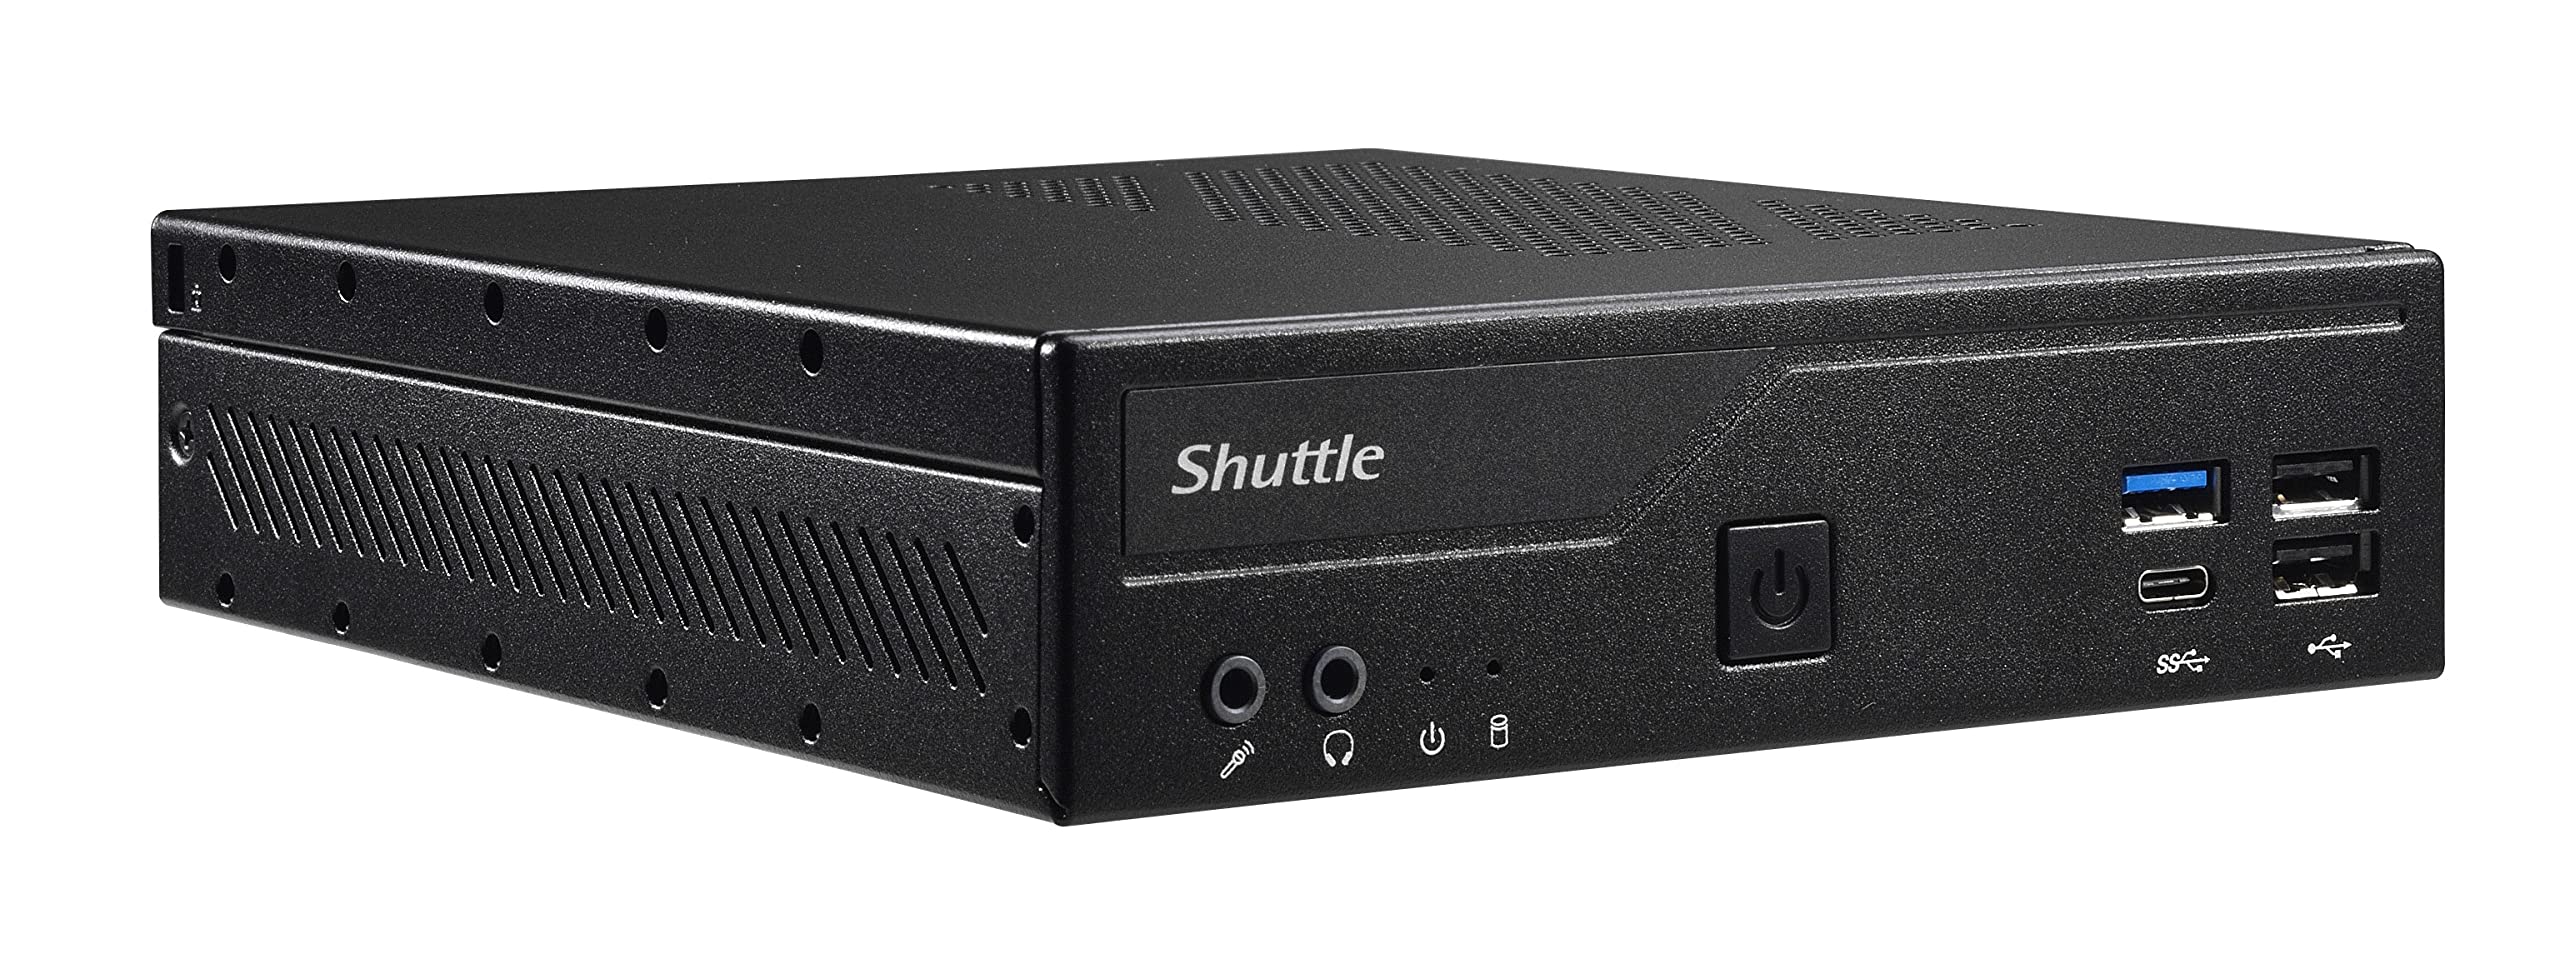 Shuttle XPC Slim DH610S Mini Barebone PC Intel H610 Support 65W Cometlake CPU No Ram No HDD/SSD No CPU No OS - Click Image to Close